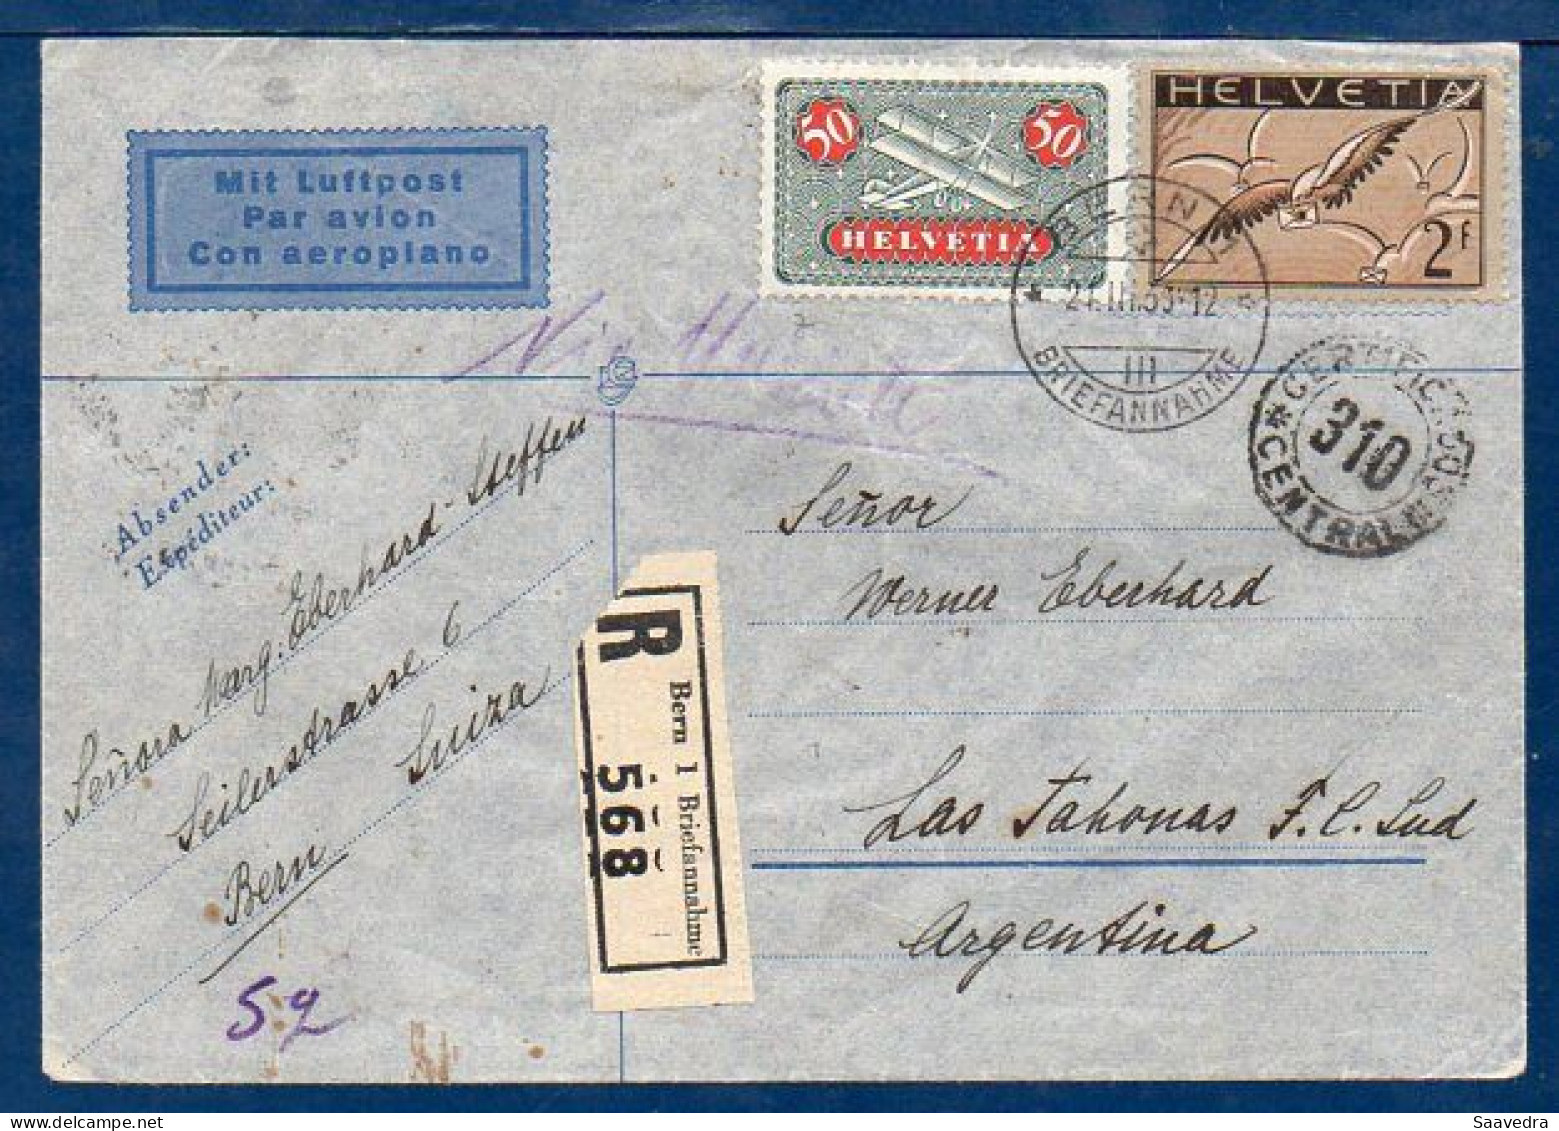 Switzerland To Argentina, 1936, Via Air France  (008) - Storia Postale